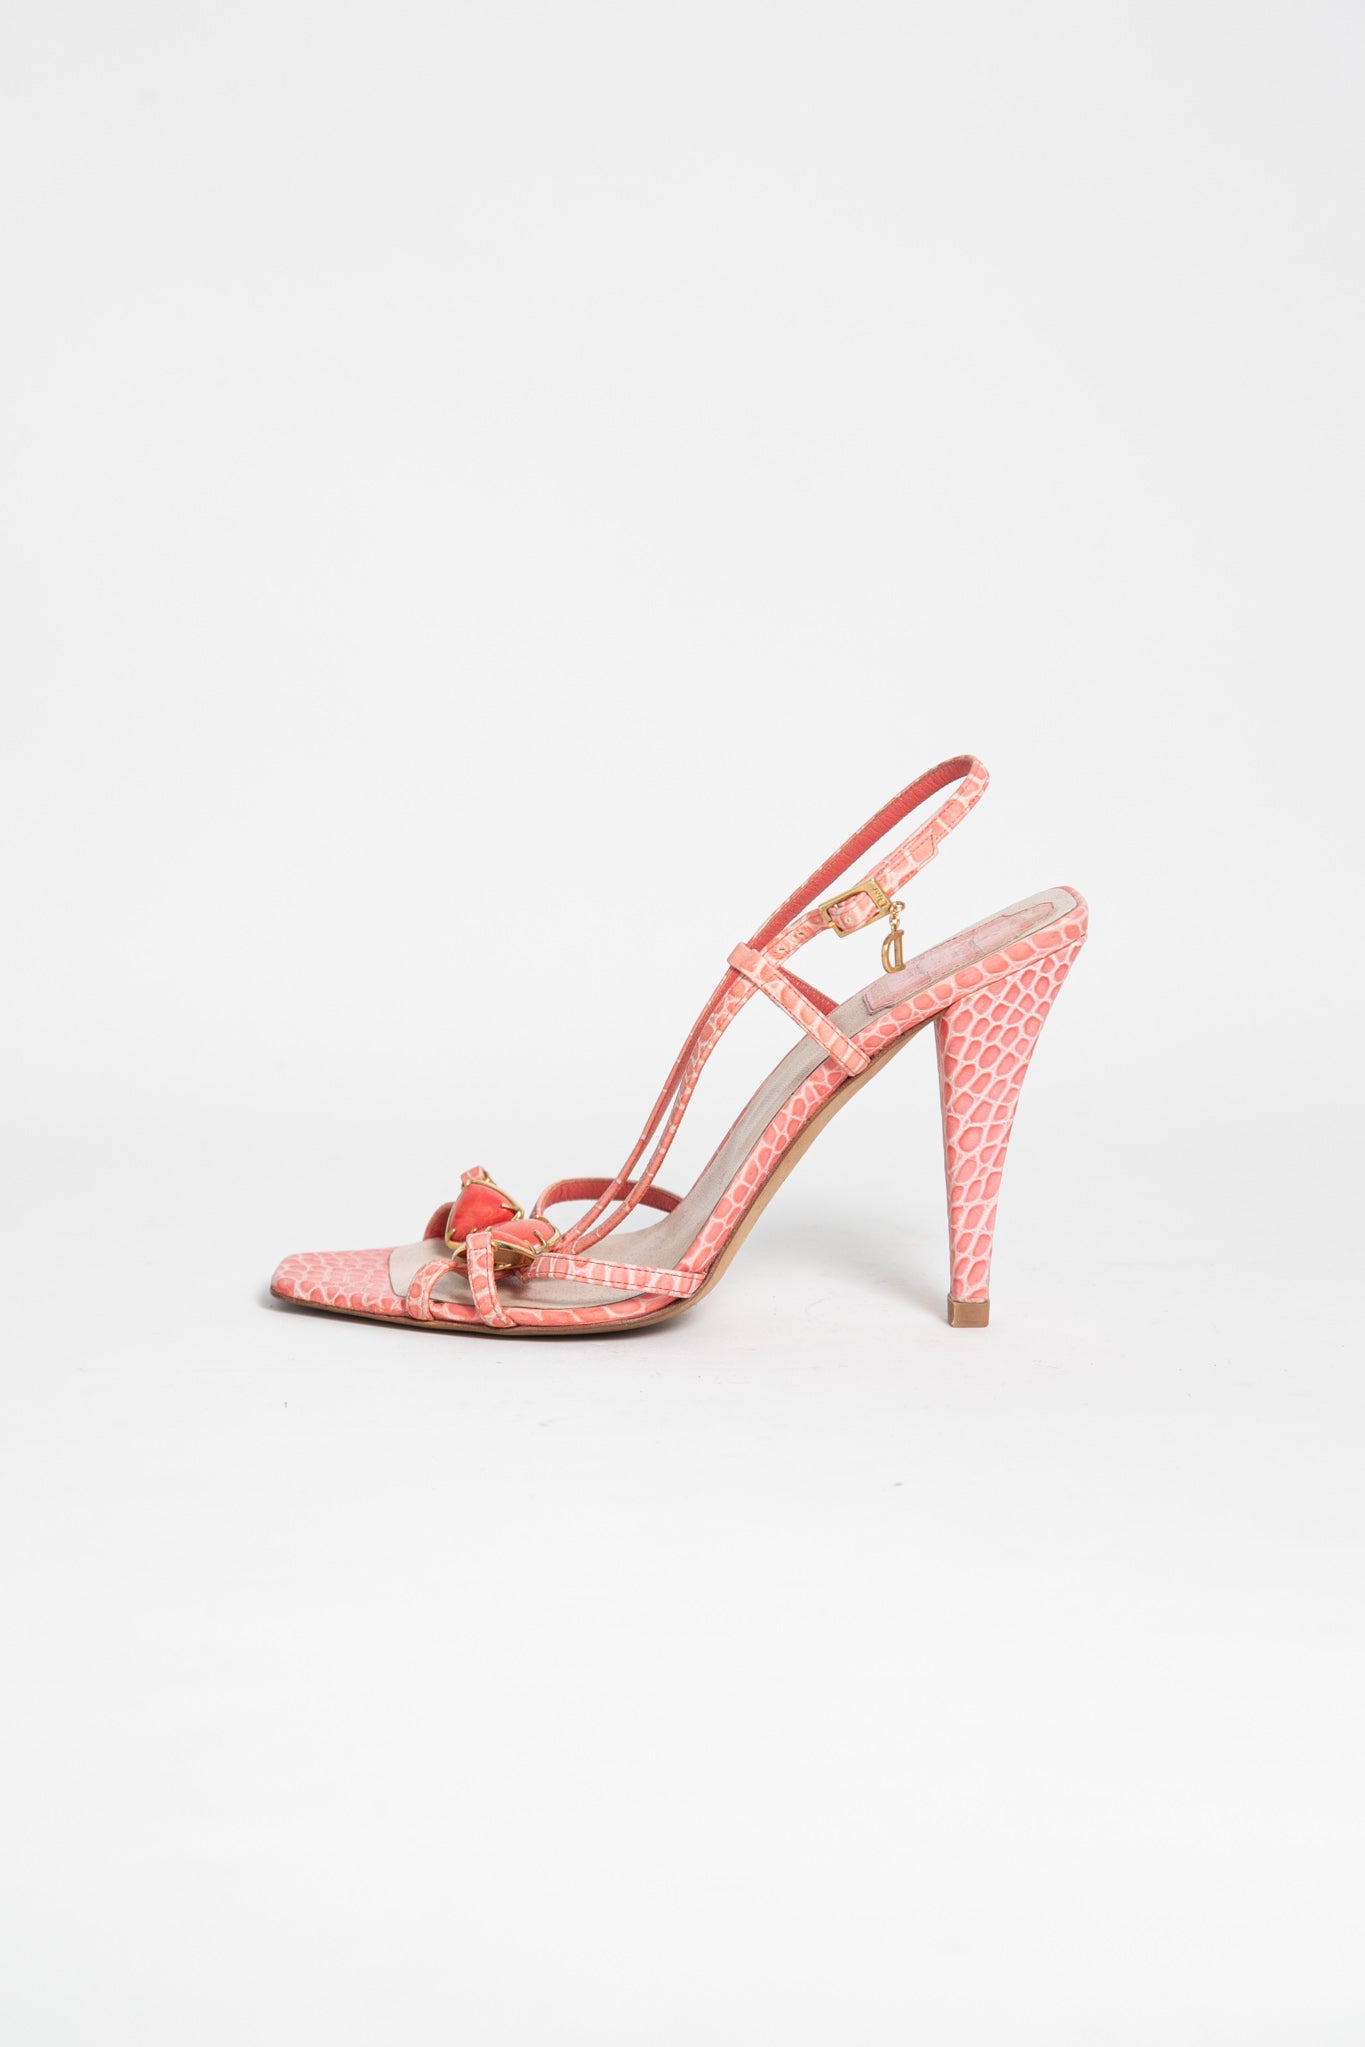 Dior Pink Piedra Sandals